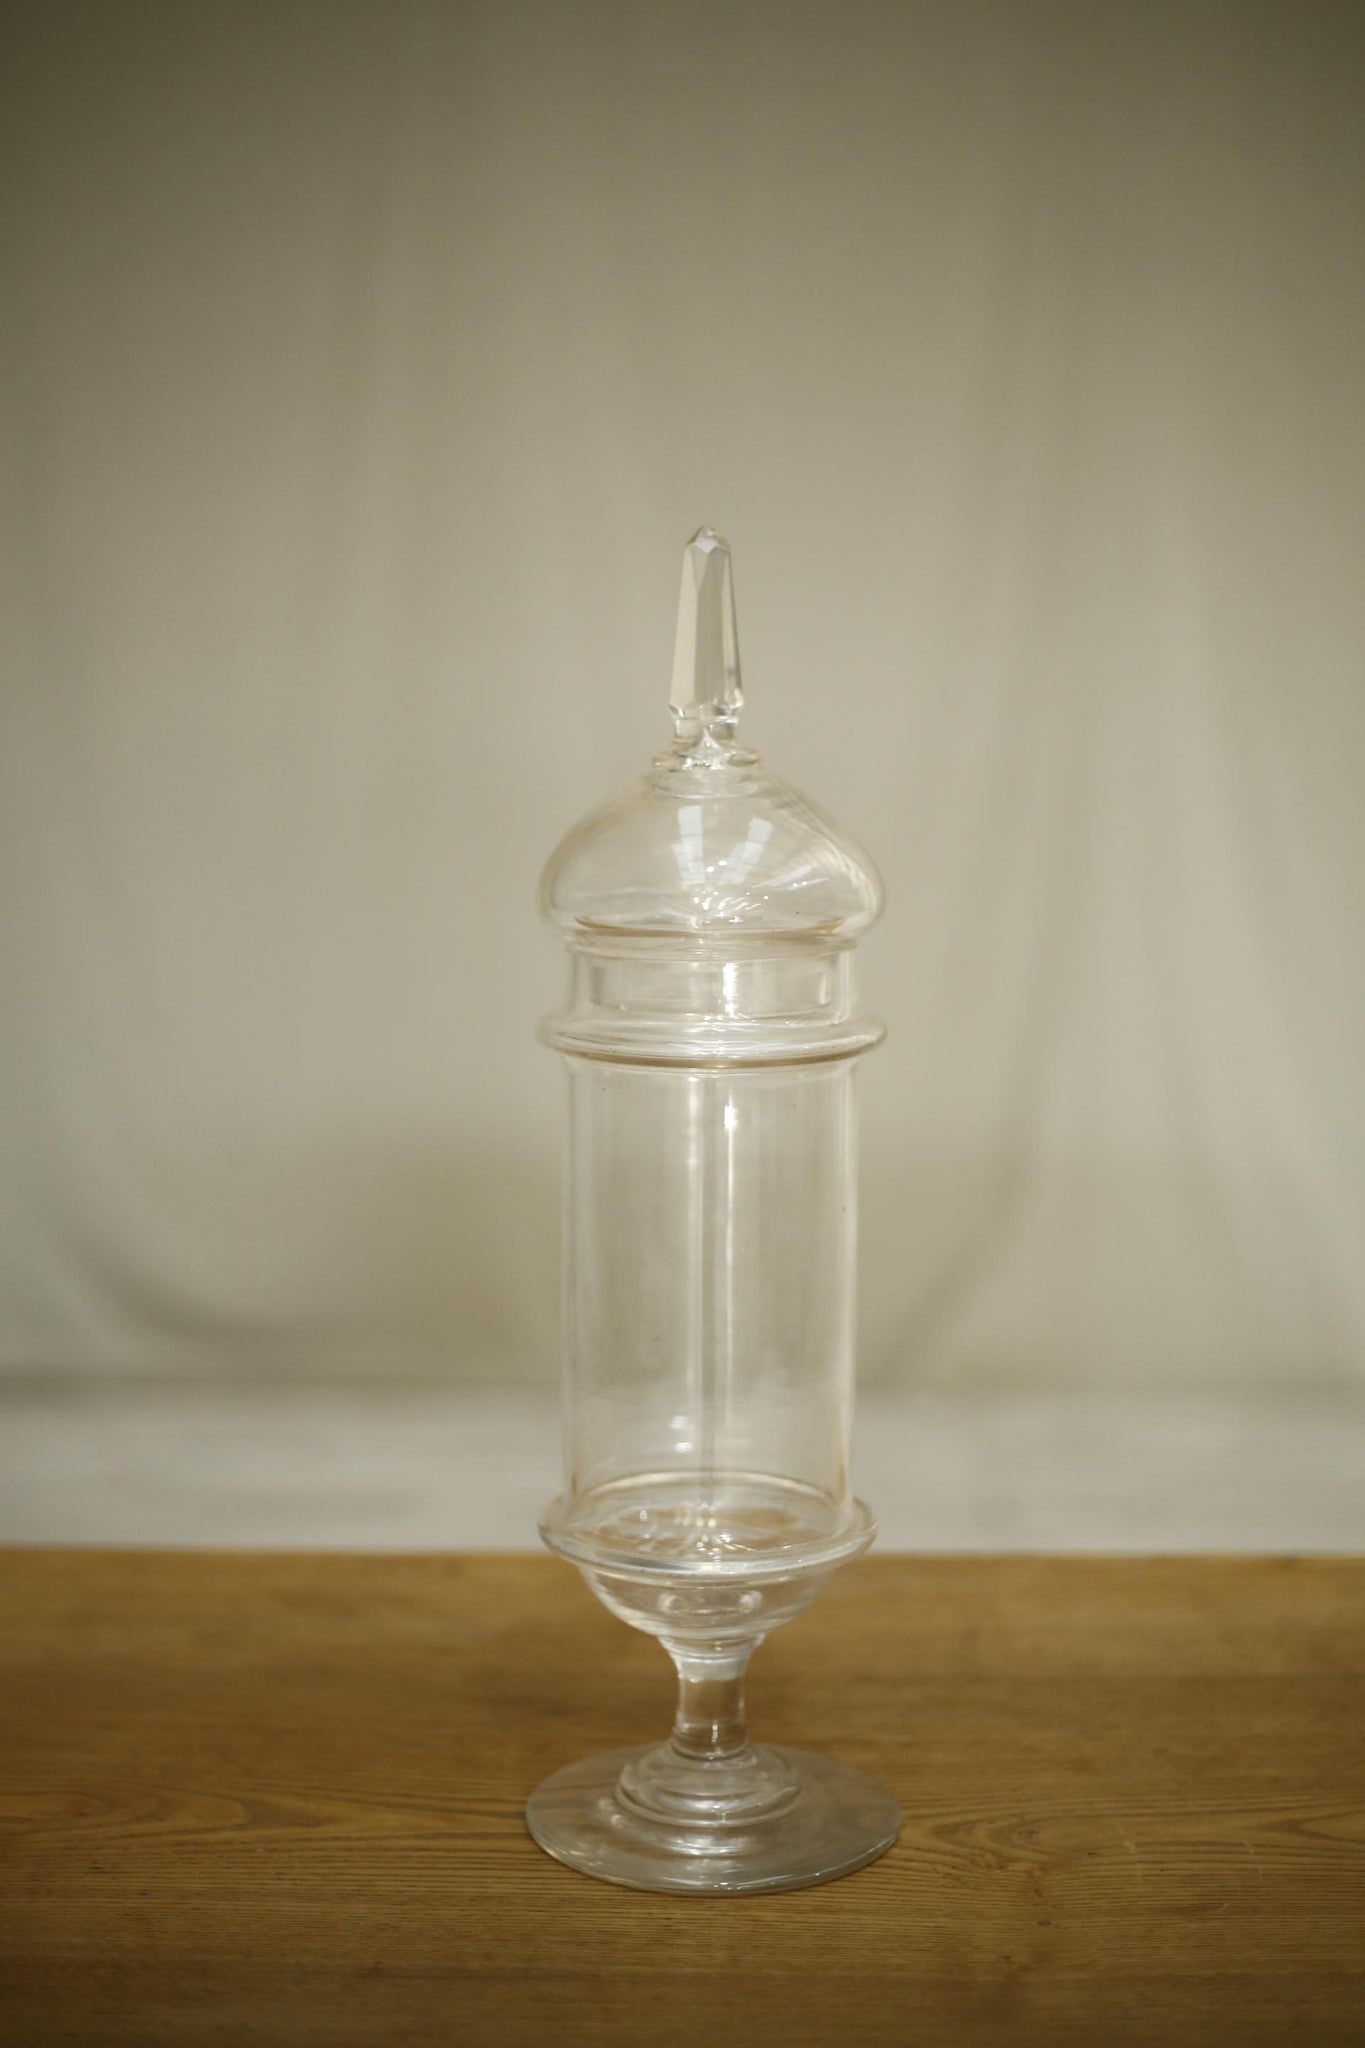 19th century glass Apothecary jar